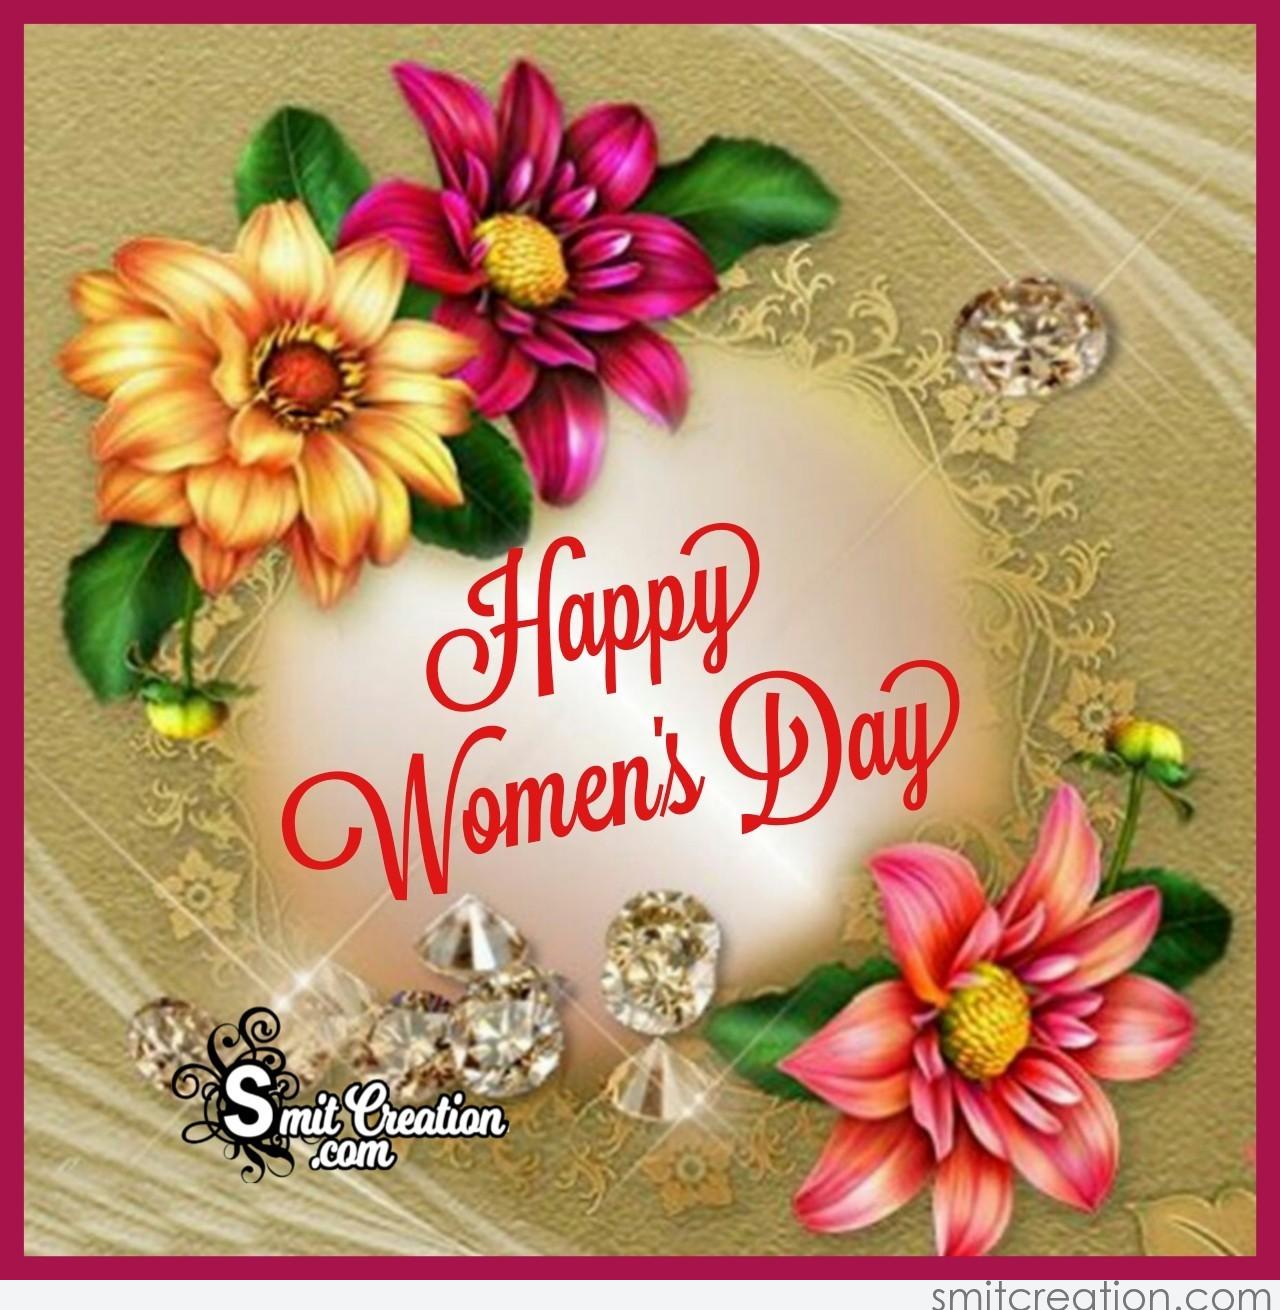 Happy Women's Day! Beautiful Greeting Card - SmitCreation.com